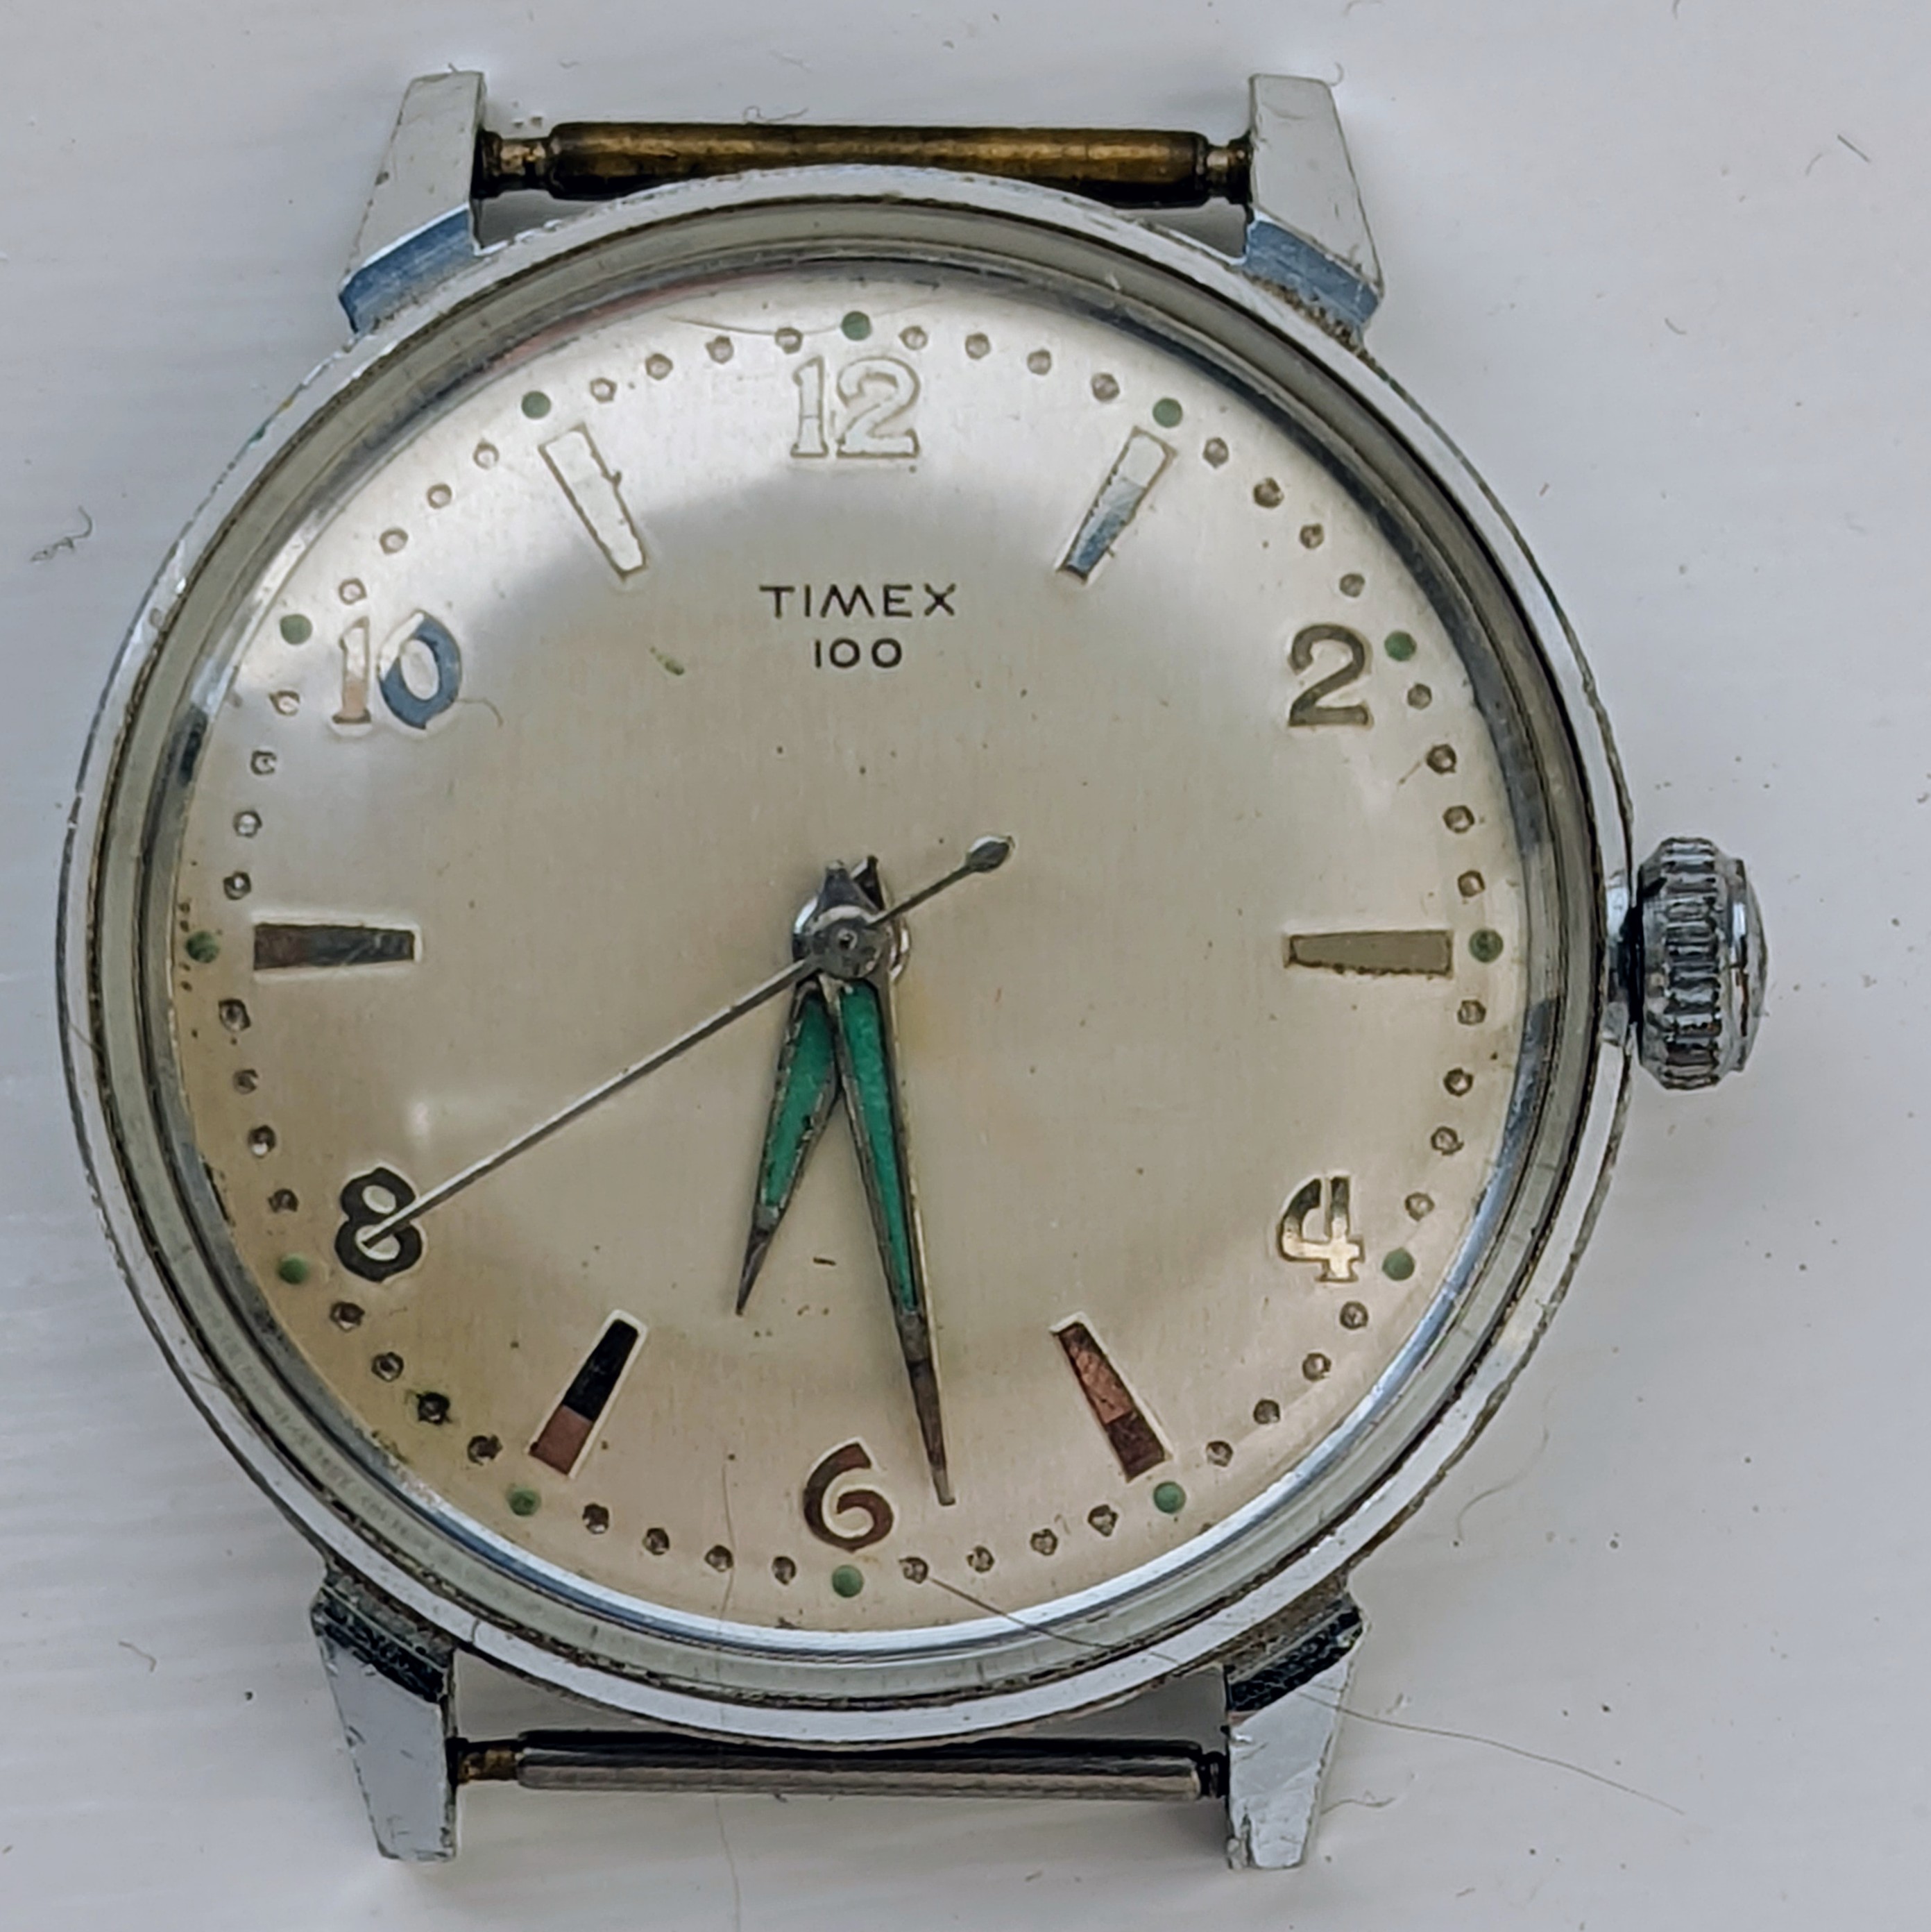 Timex 100 1959 Ref. 2077 2259